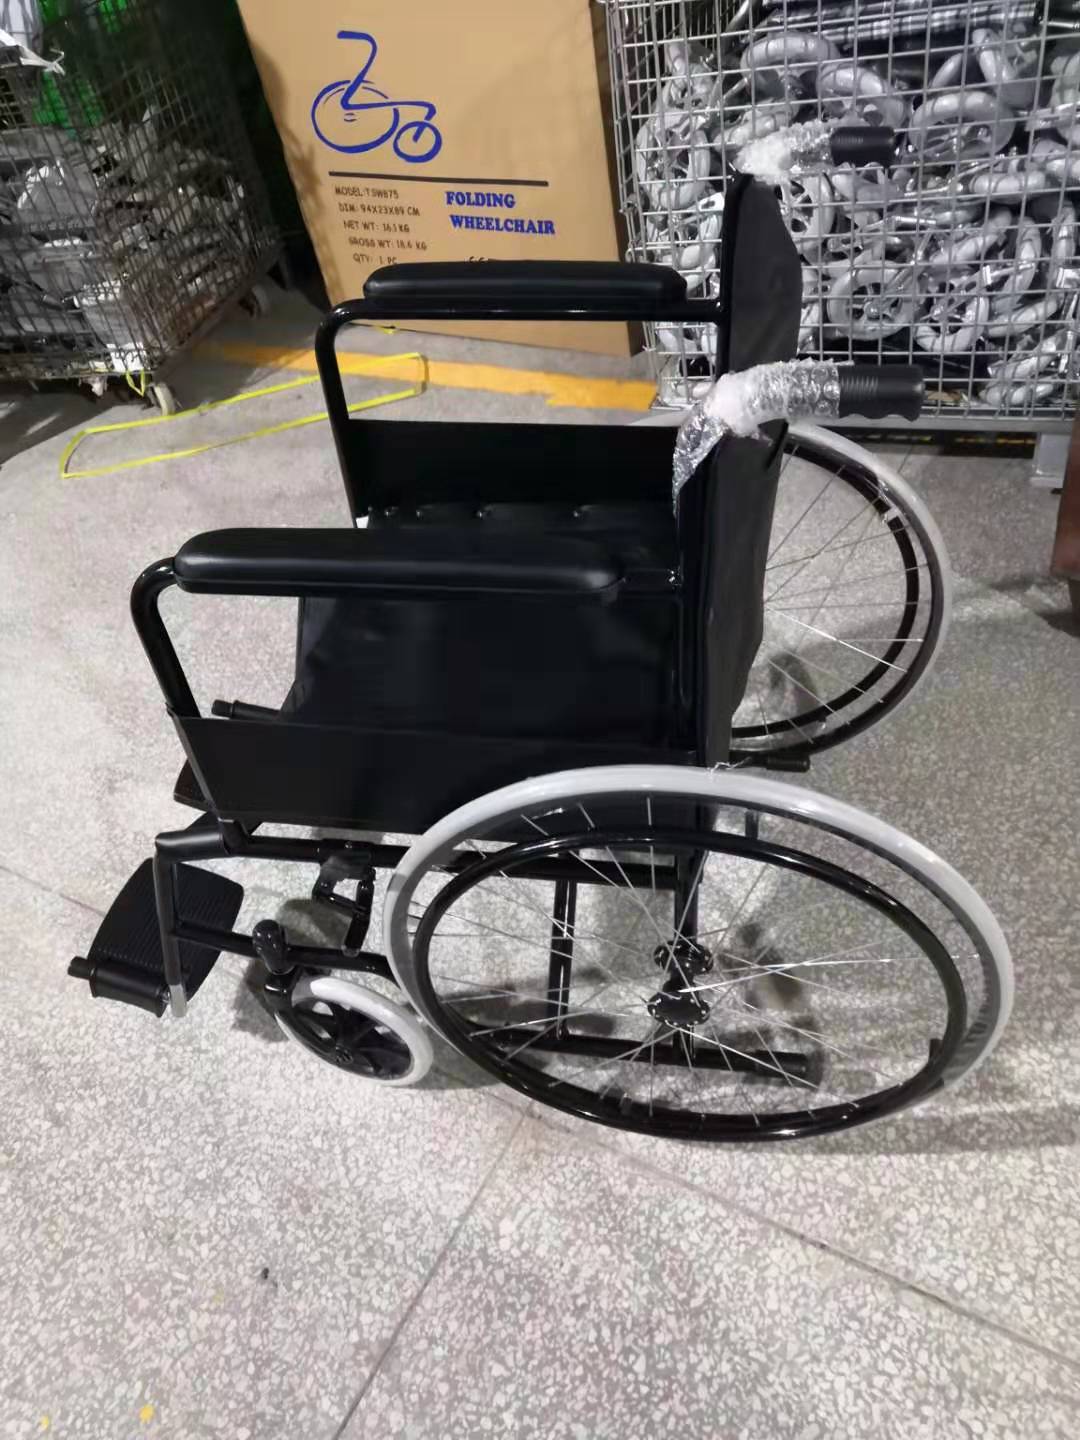 Wheelchair quality inspection sent to Moldova